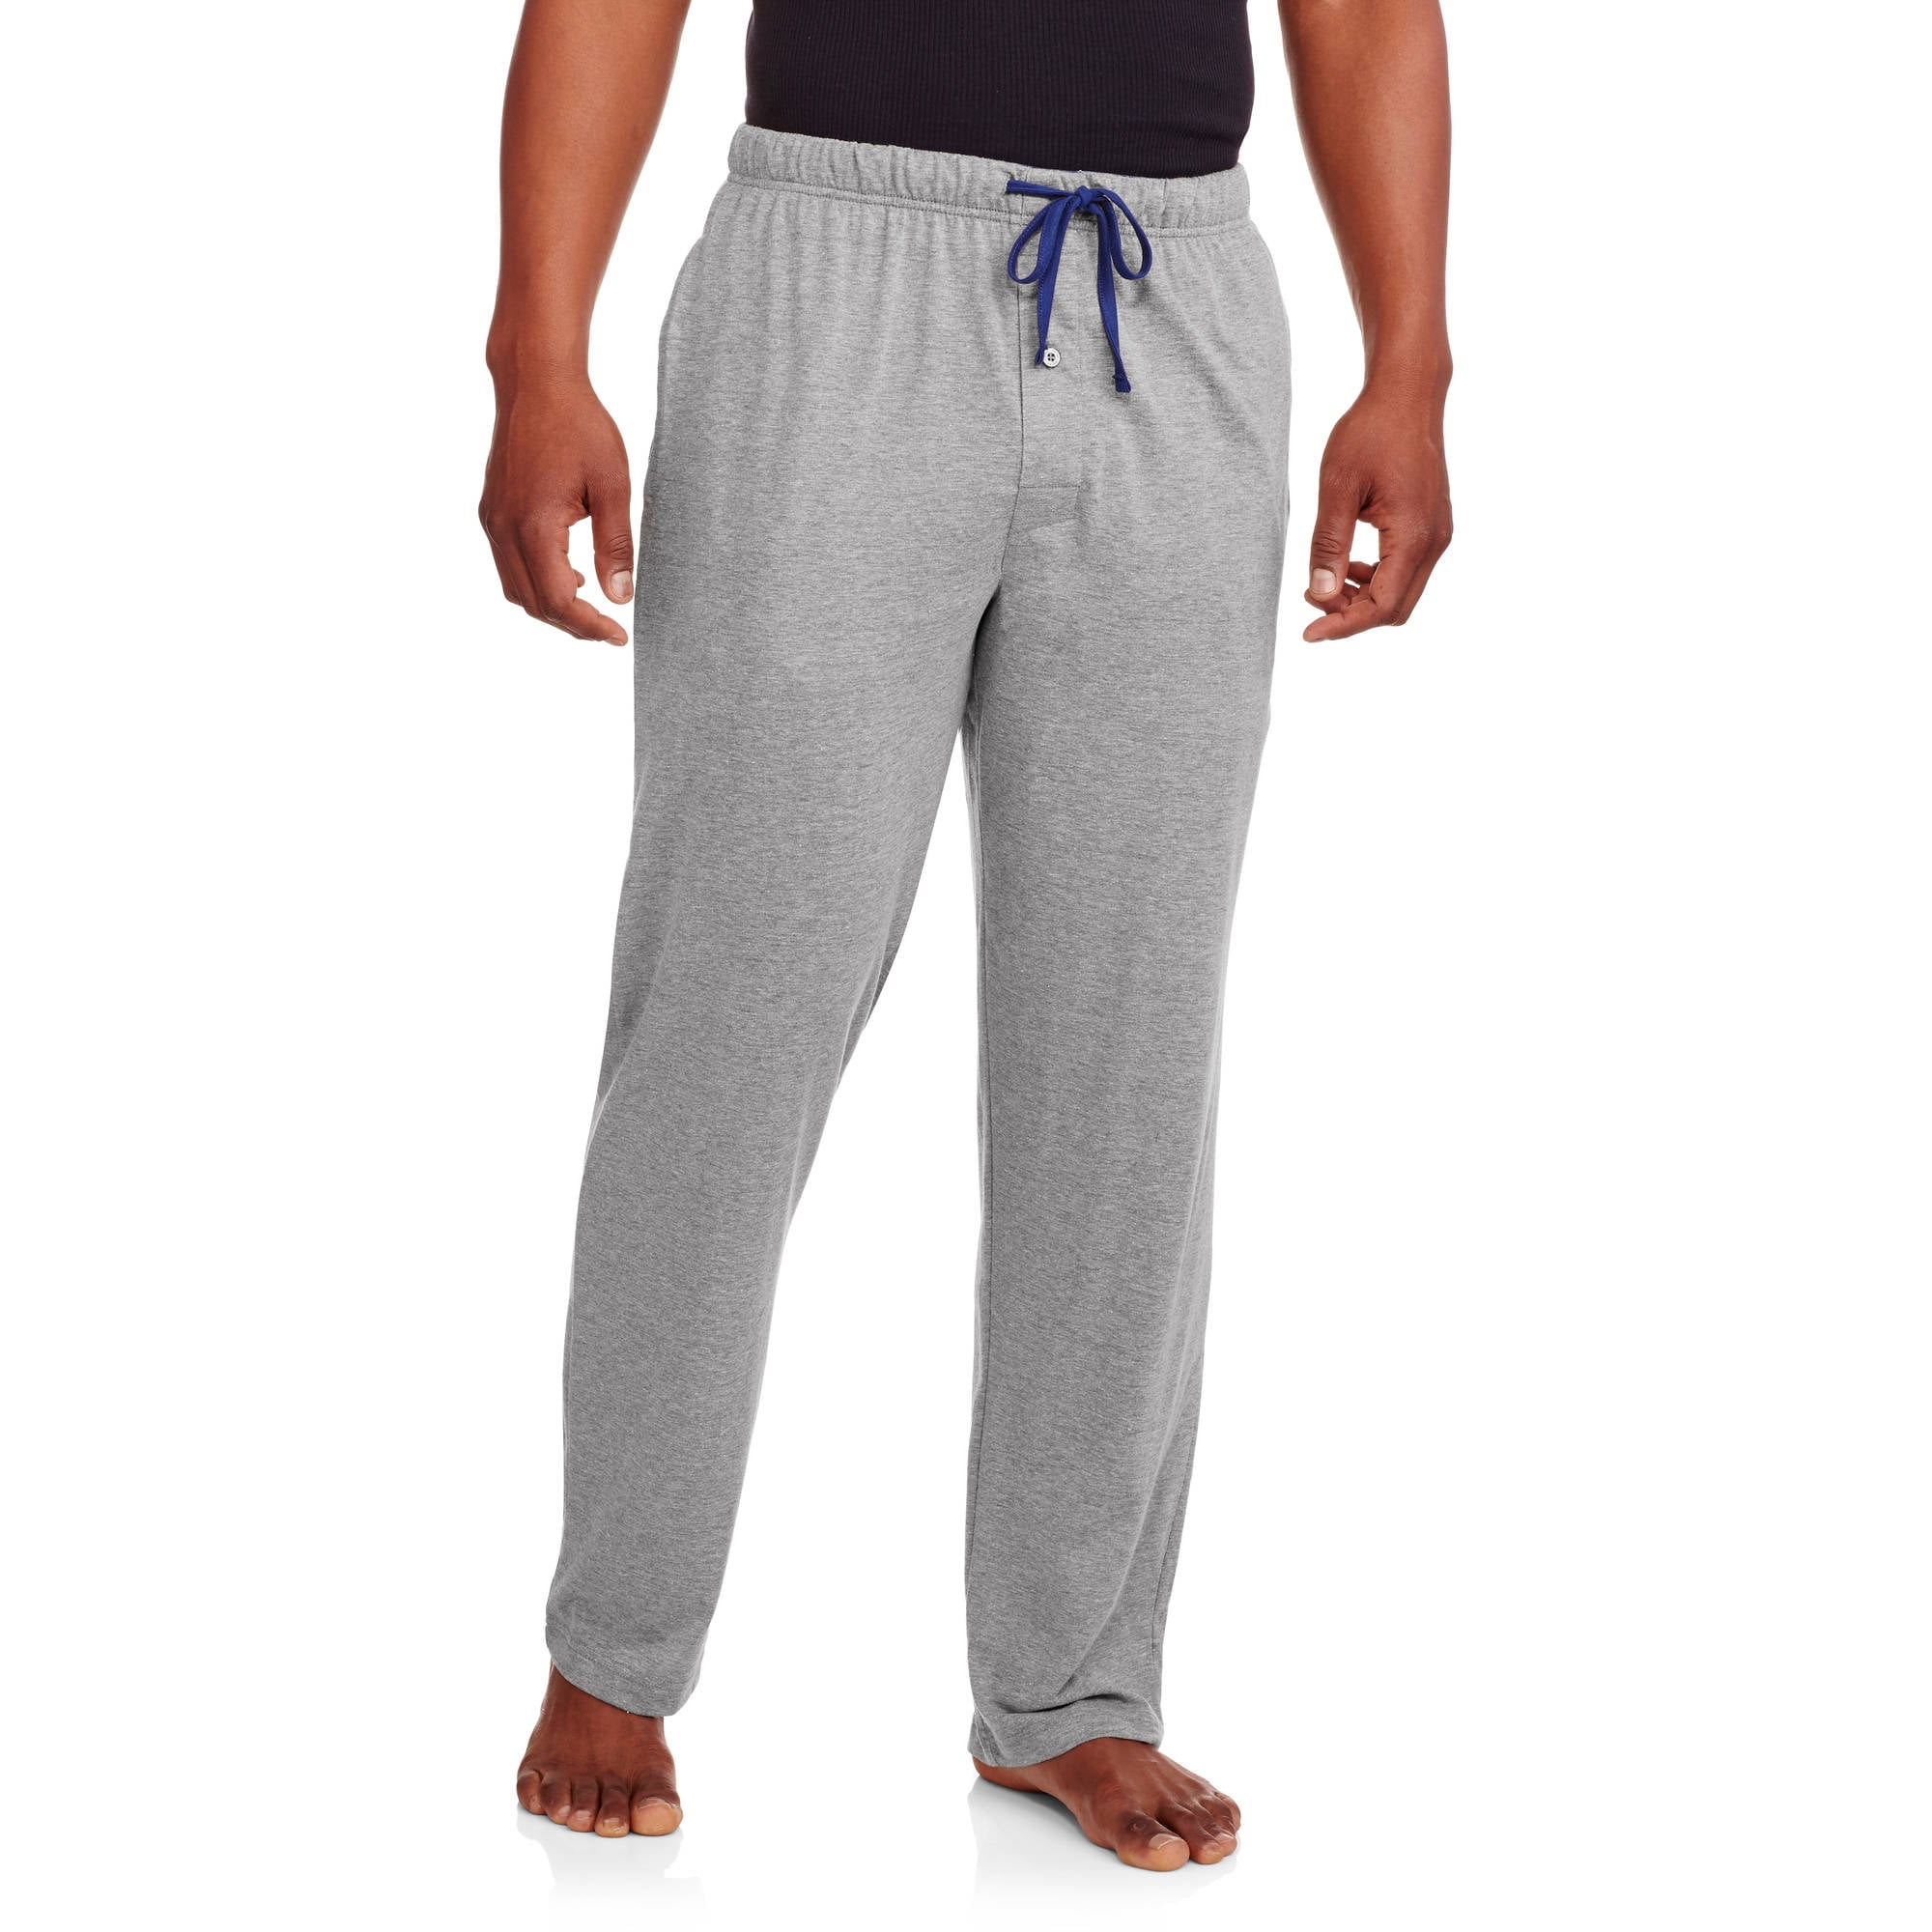 Hanes Mens 2 PC Cotton Poly Sleep Pajama Set S M L XL 2X varied color stripe